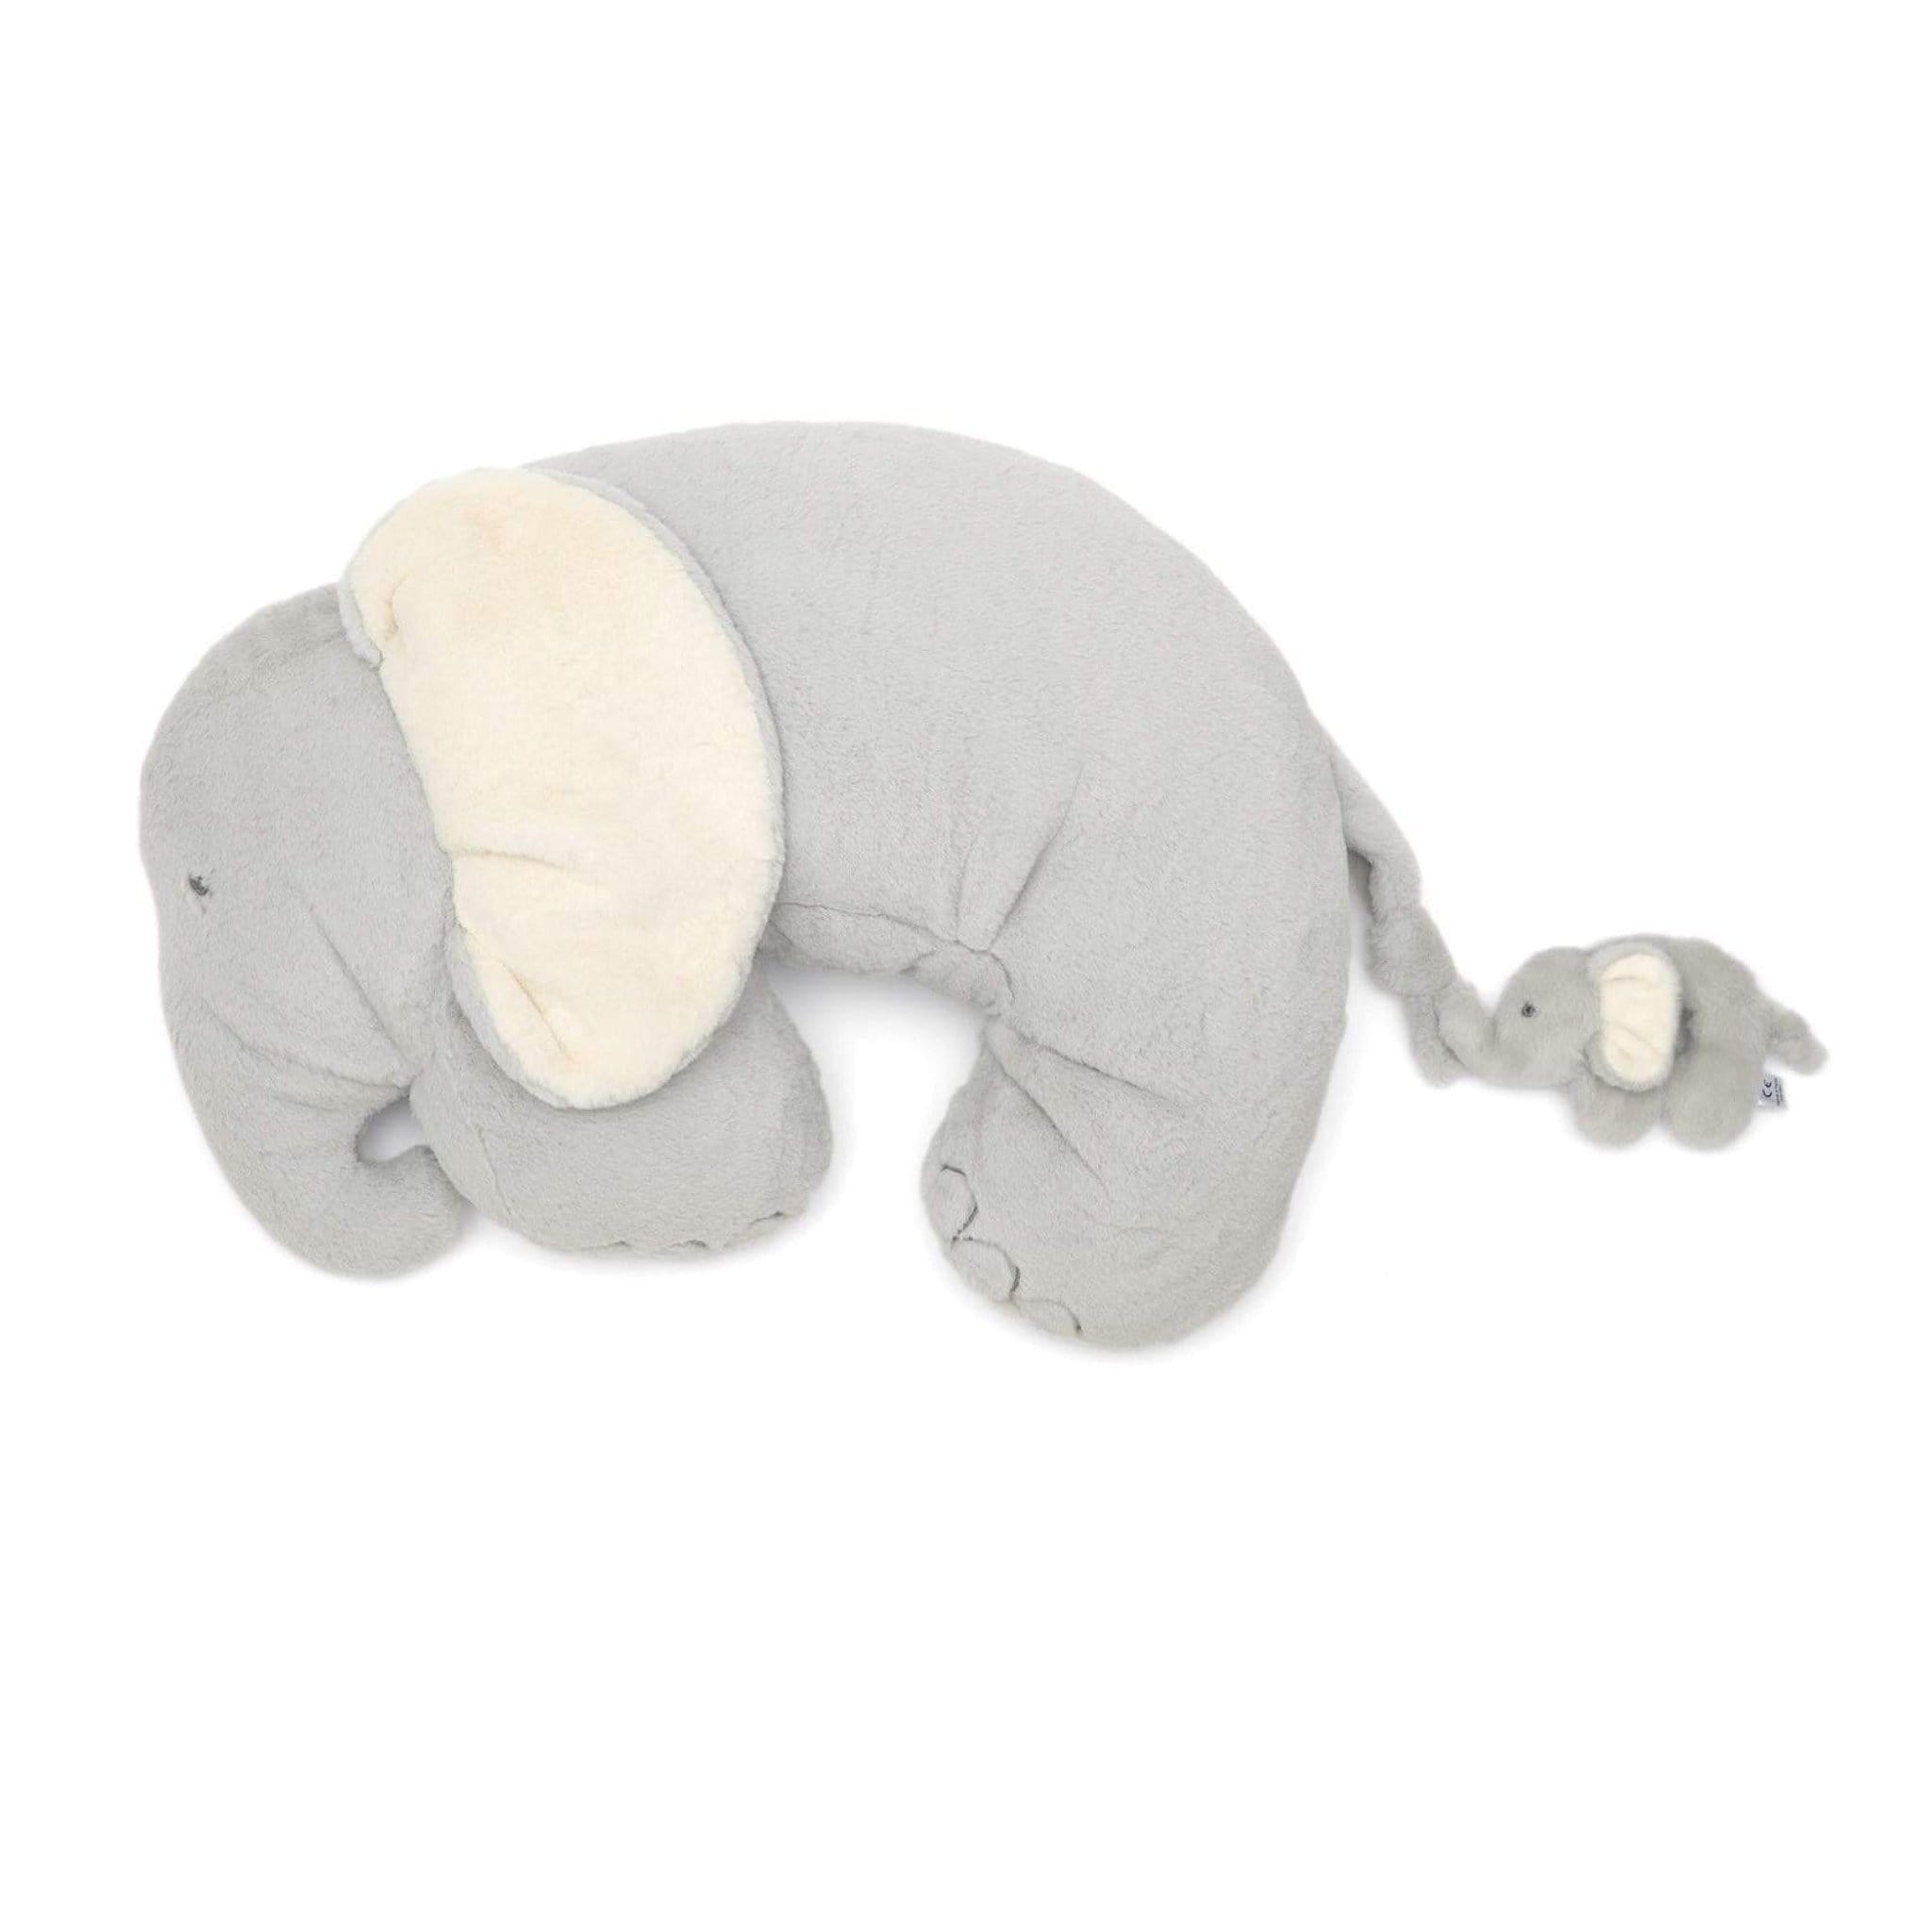 Mamas & Papas sensory baby toys Mamas & Papas Tummy Time Snugglerug Elephant & Baby 743746800